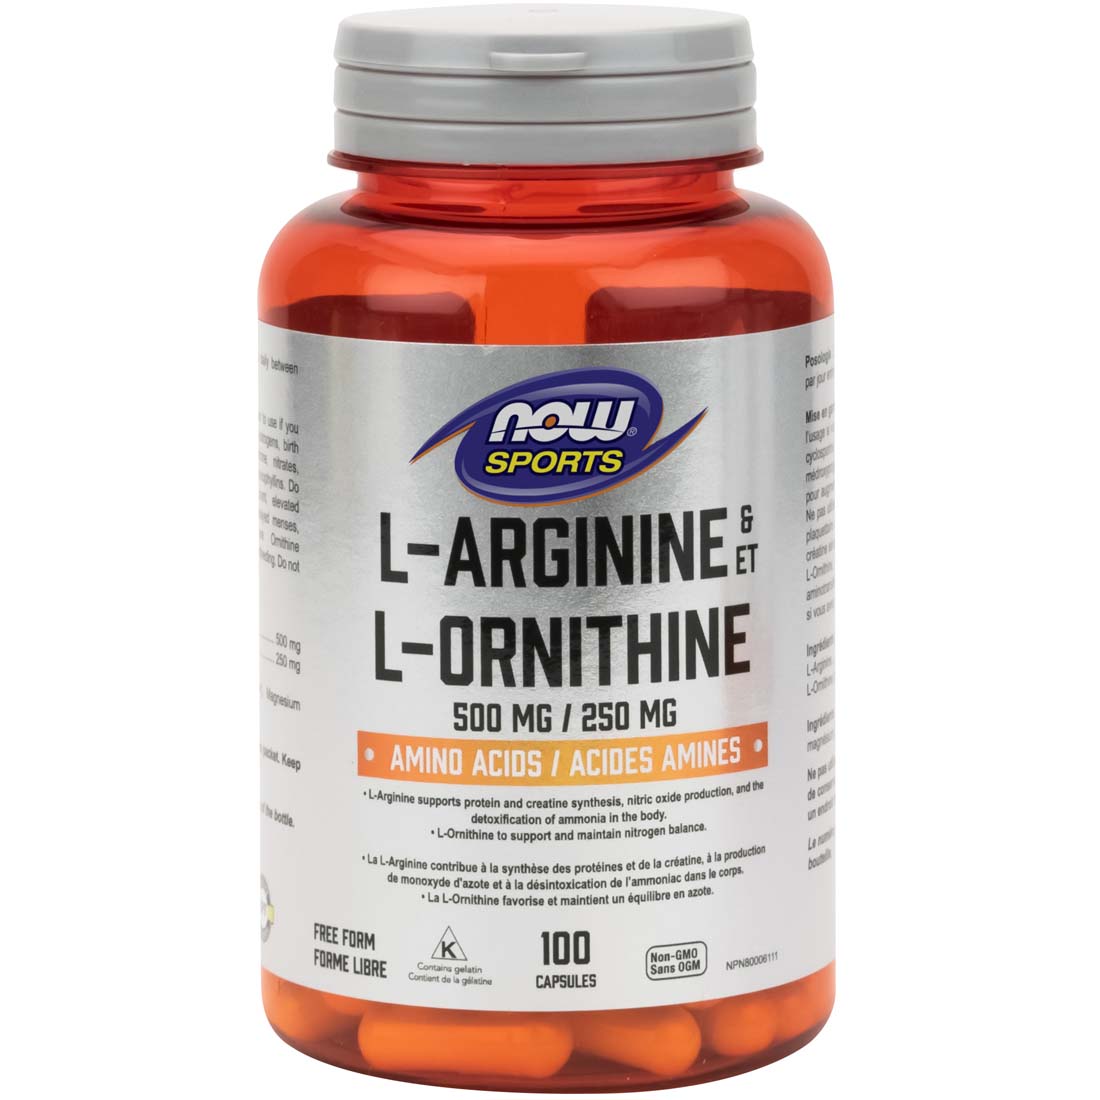 NOW L-Arginine & L-Ornithine, 500mg/250mg